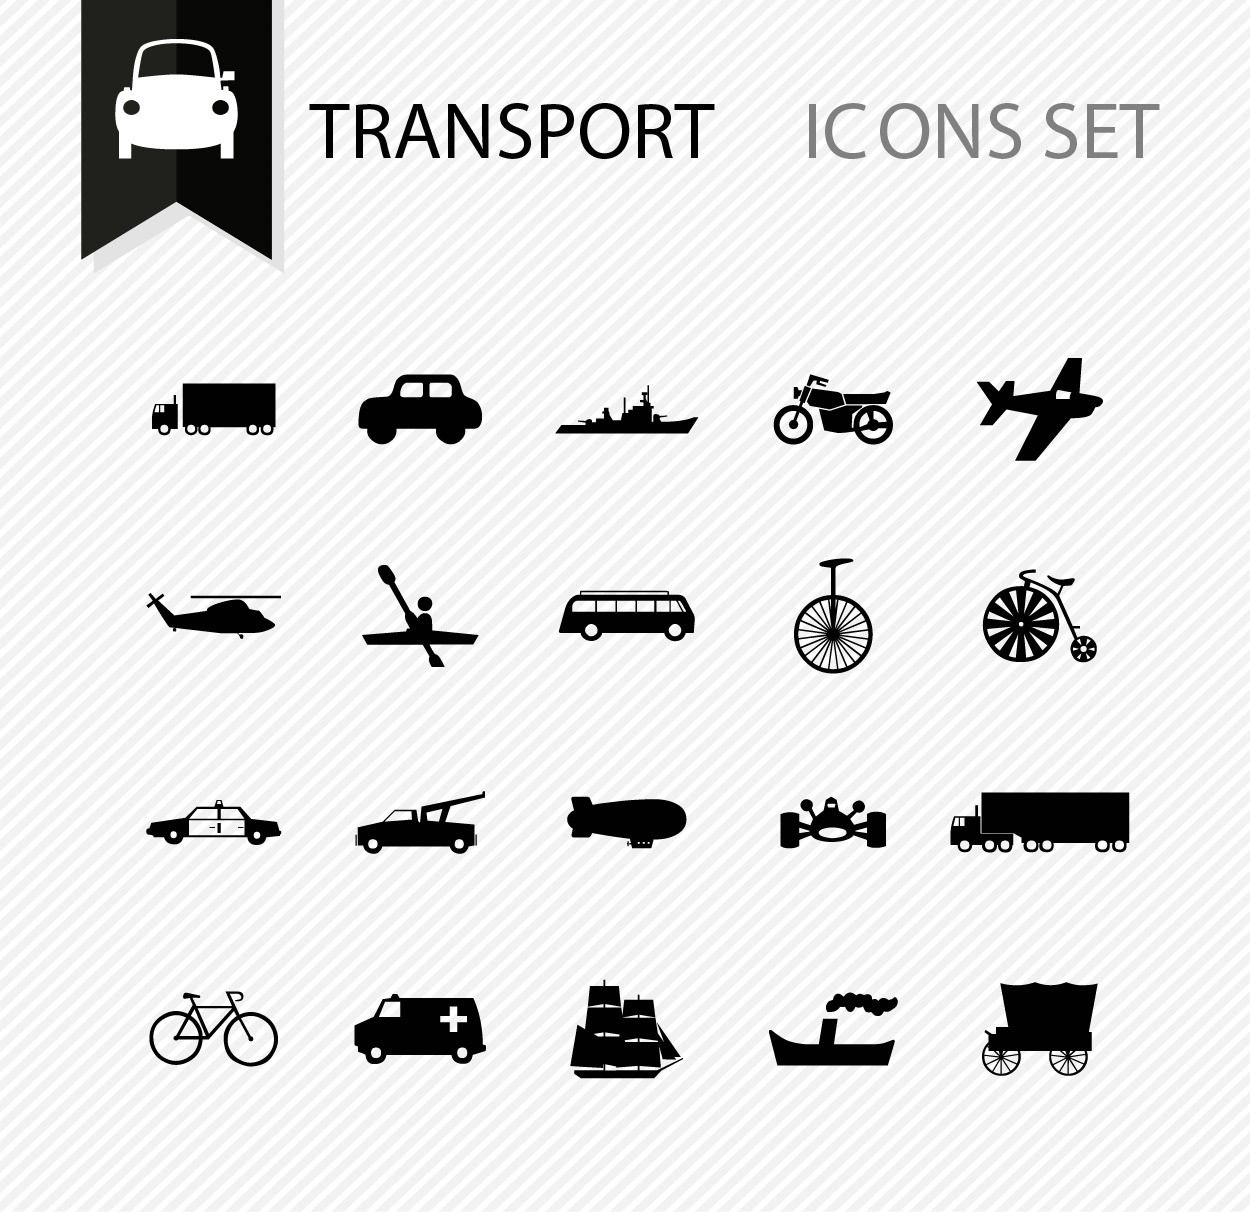 Download Several Minimal Transportation Icons - Vector download